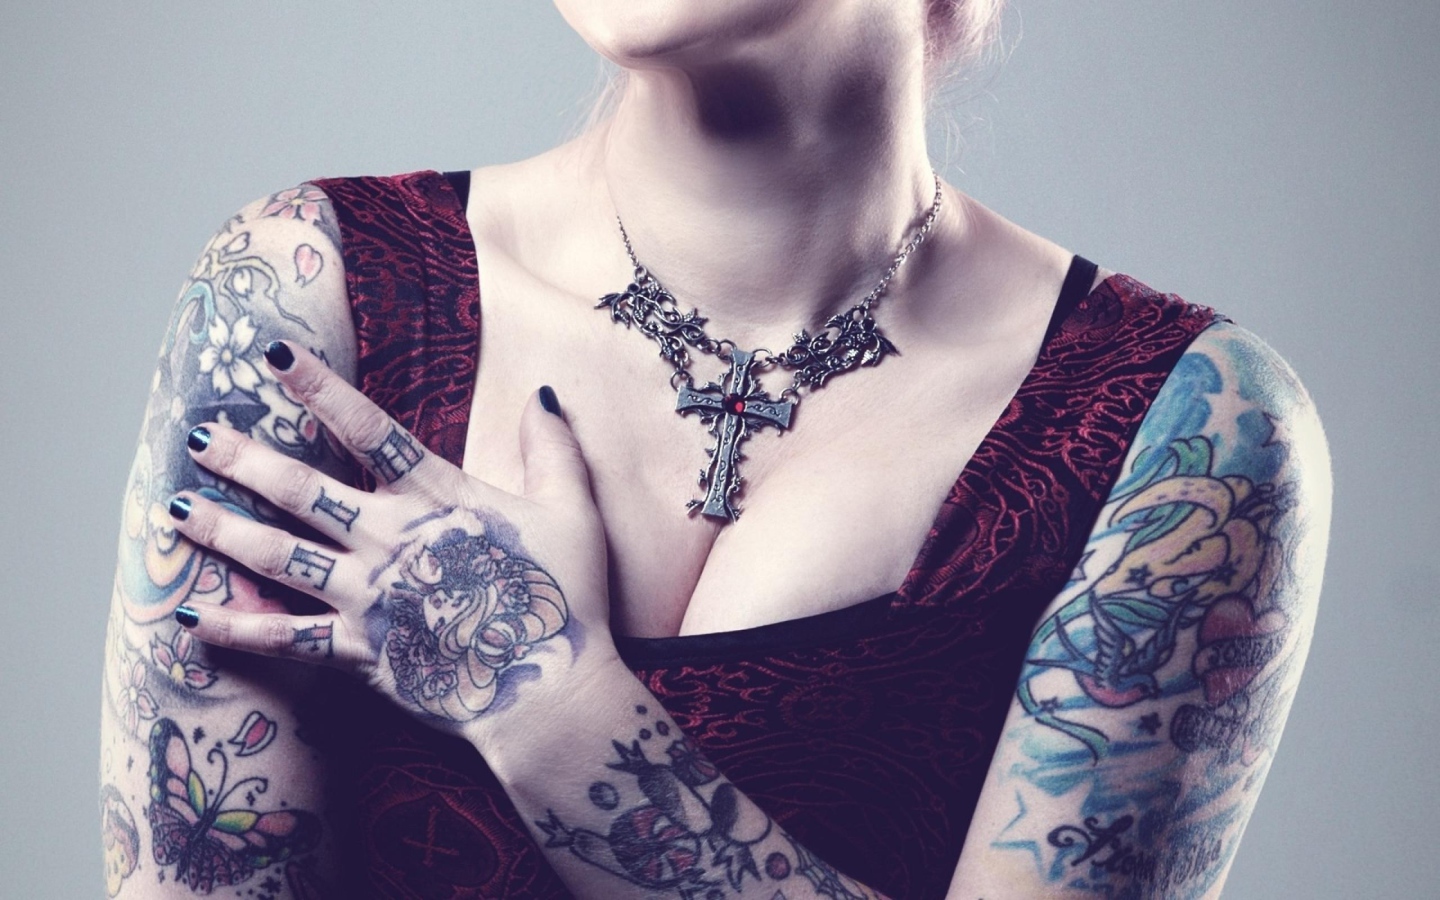 Beautiful pendant on his chest tattooed girl